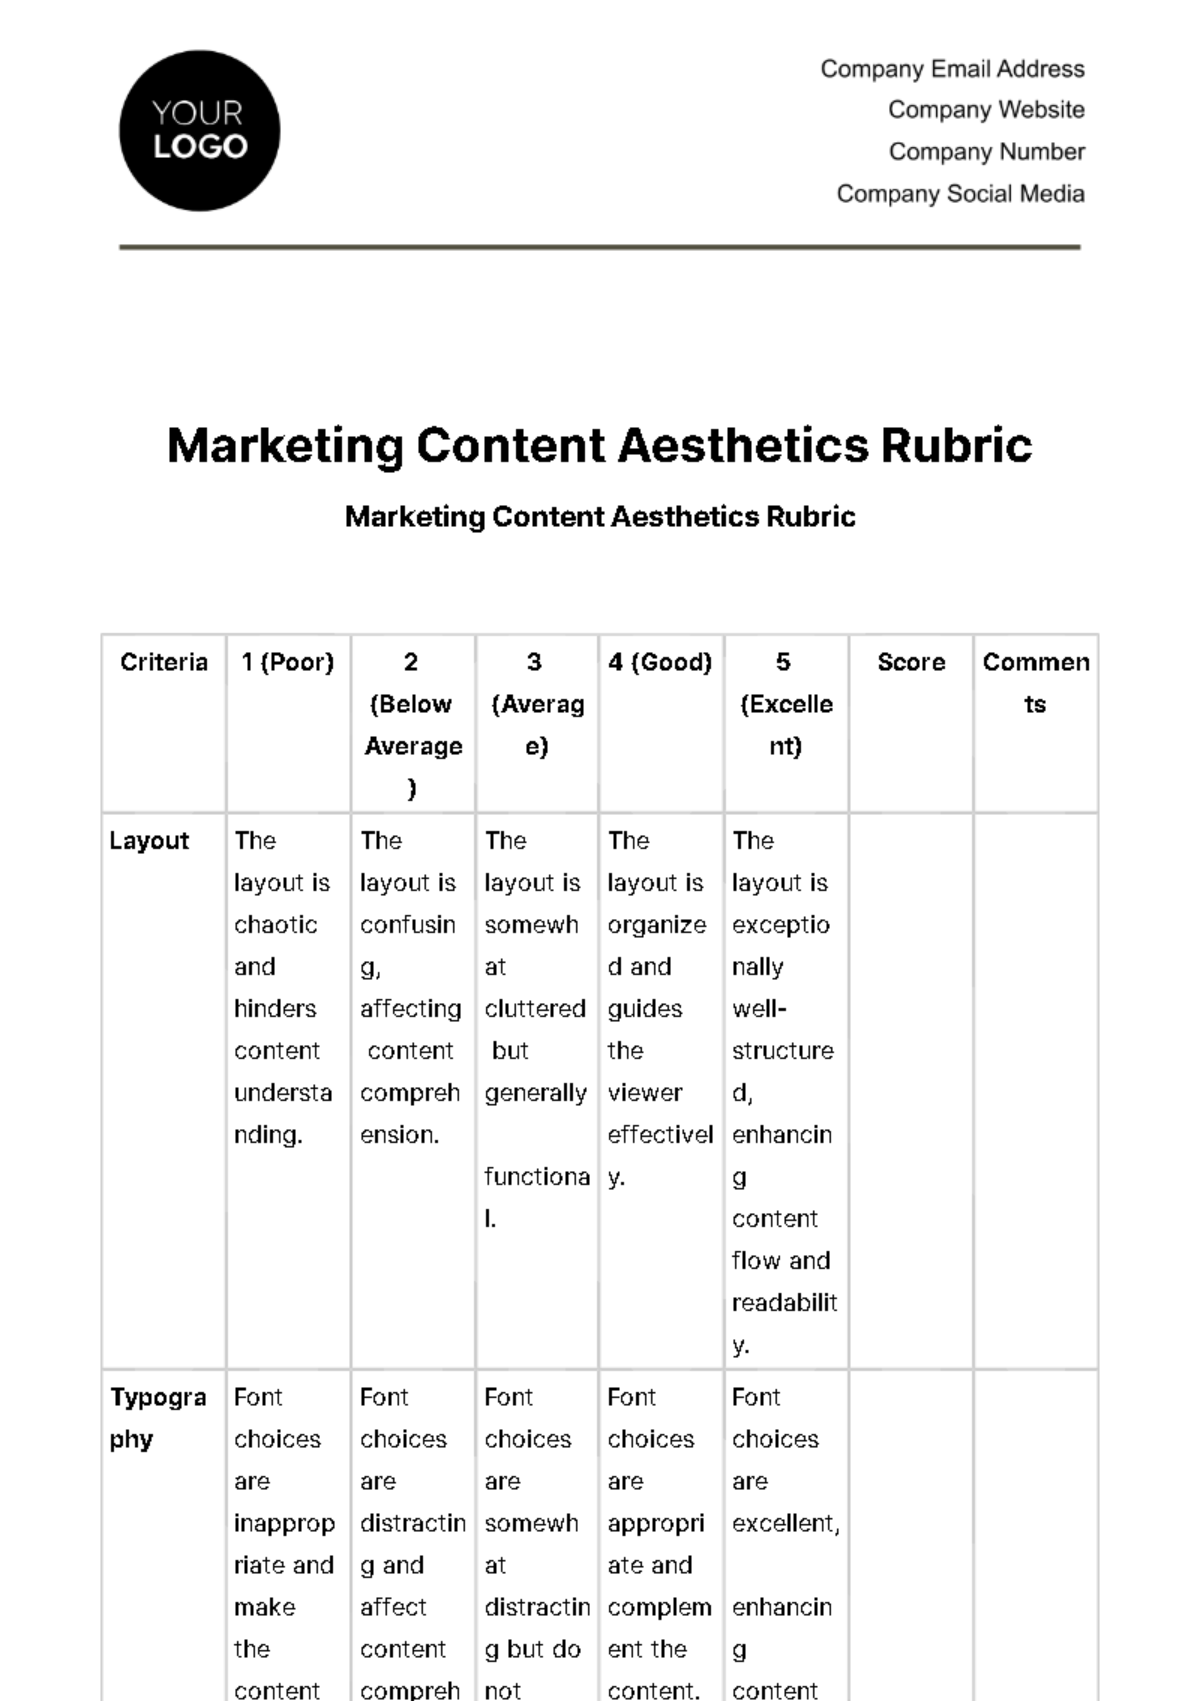 Free Marketing Content Aesthetics Rubric Template